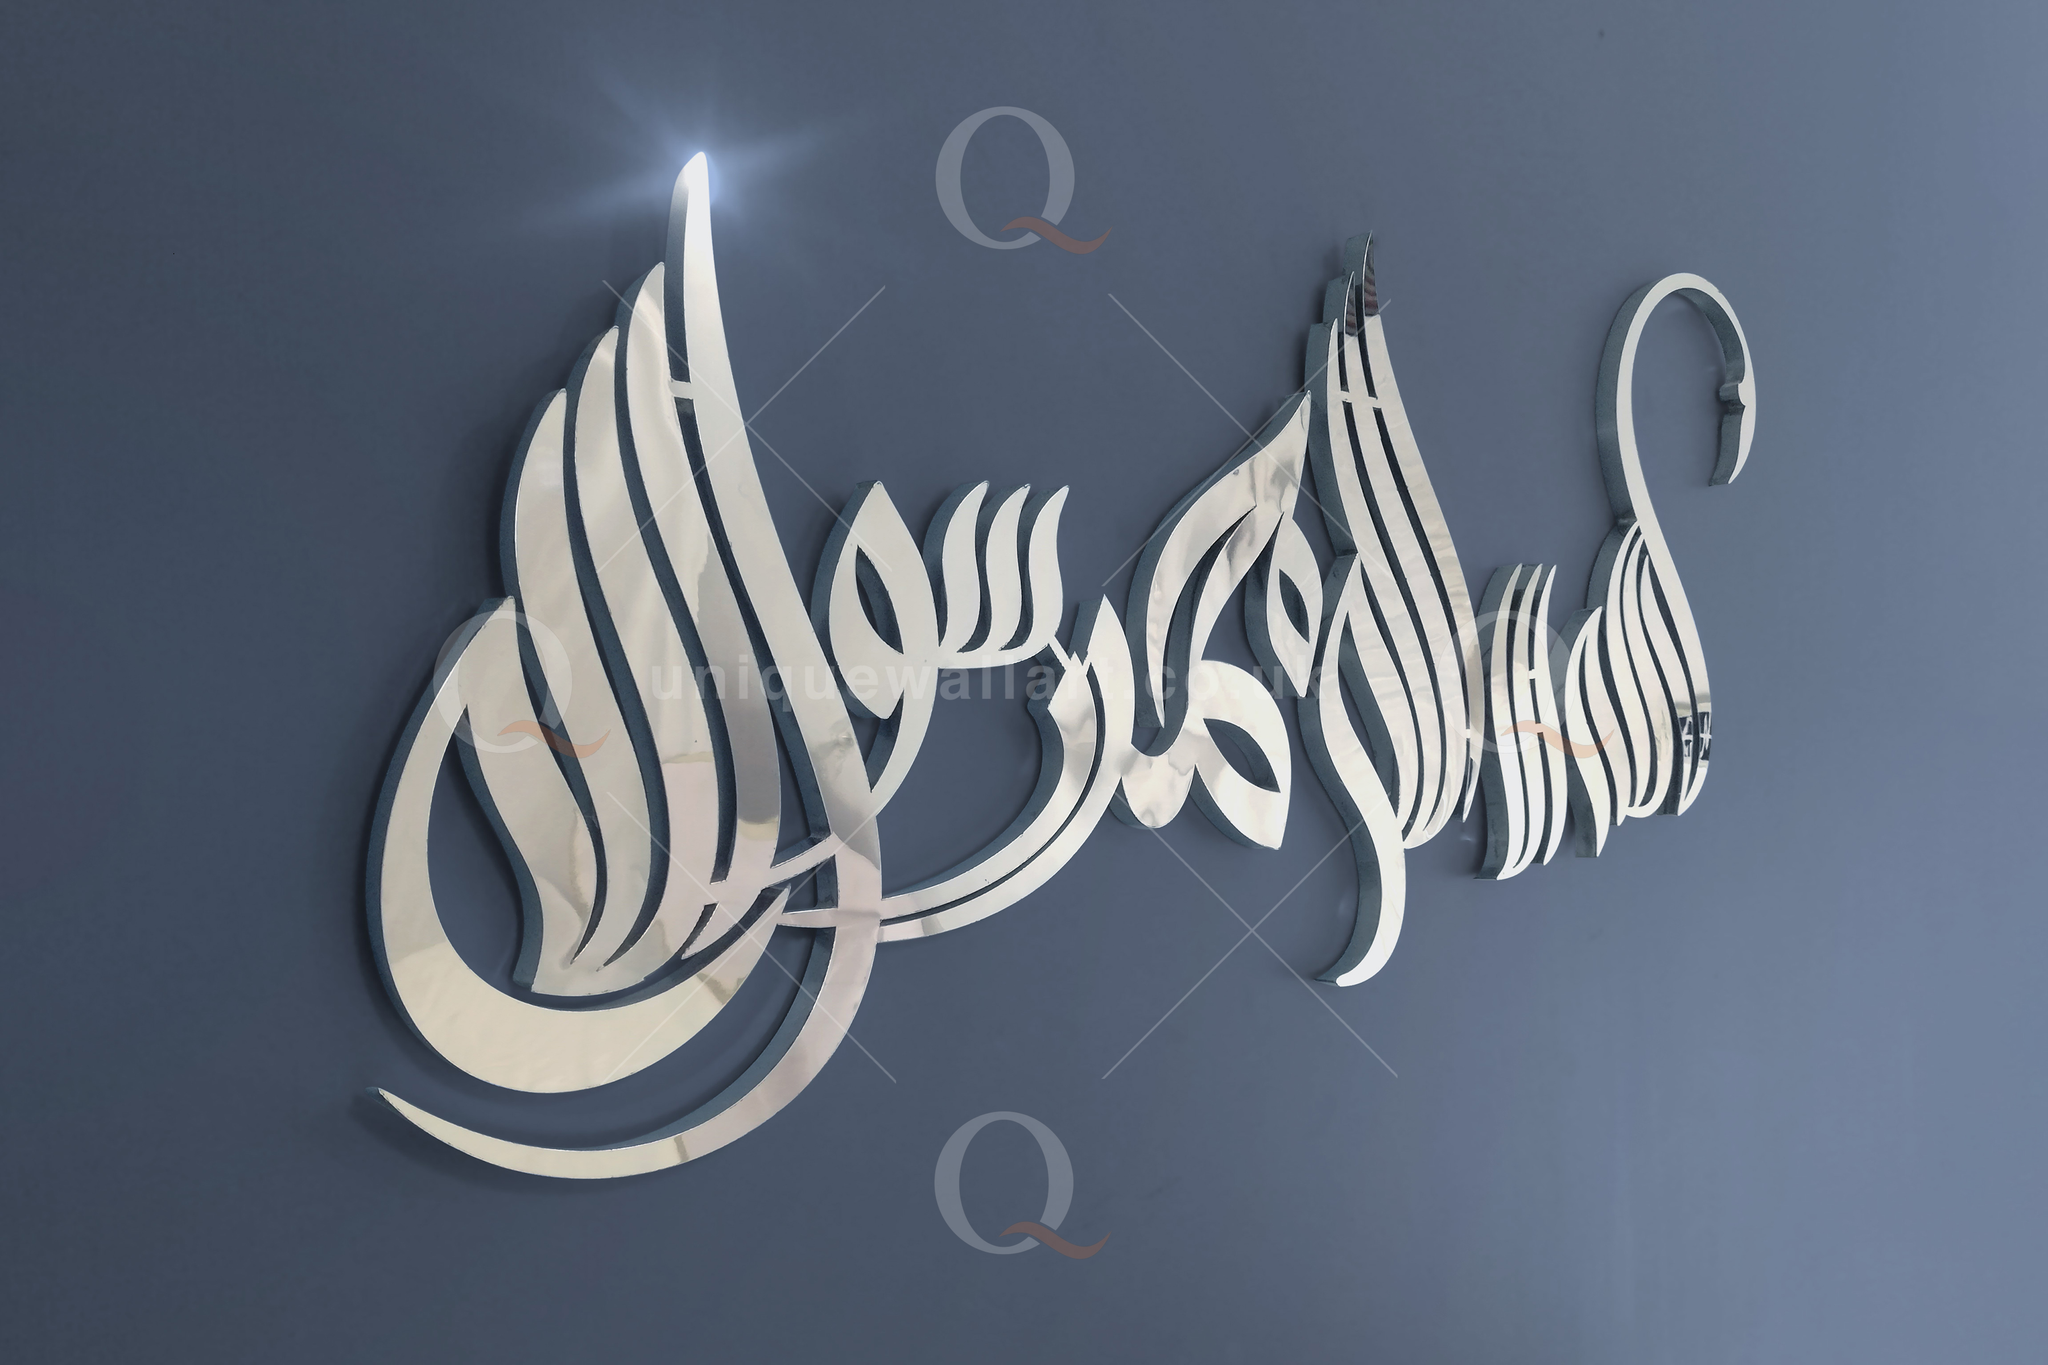 Shahada / Kalima Grand Modern Islamic Wall Art Calligraphy 3D Stainless Steel